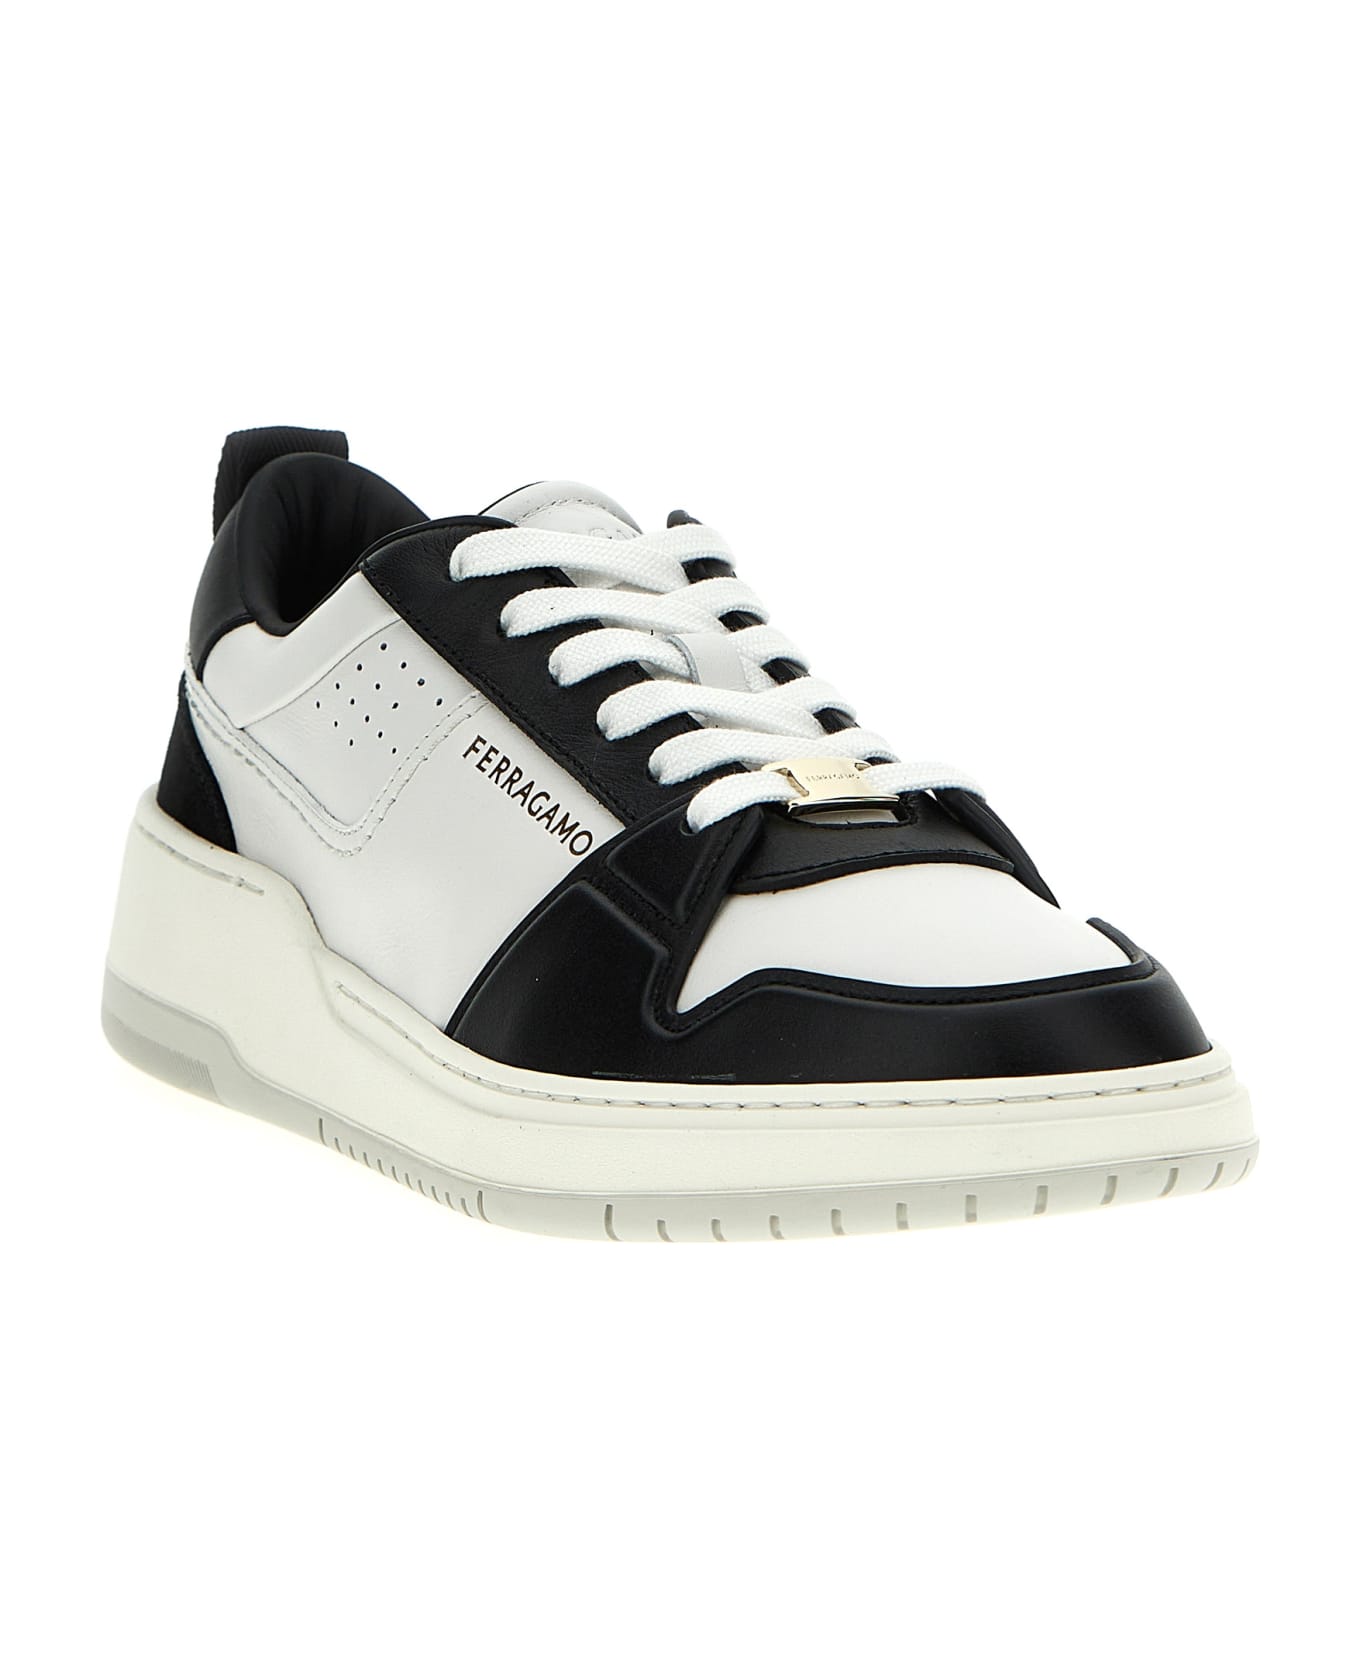 Ferragamo 'dennis' Sneakers - White/Black